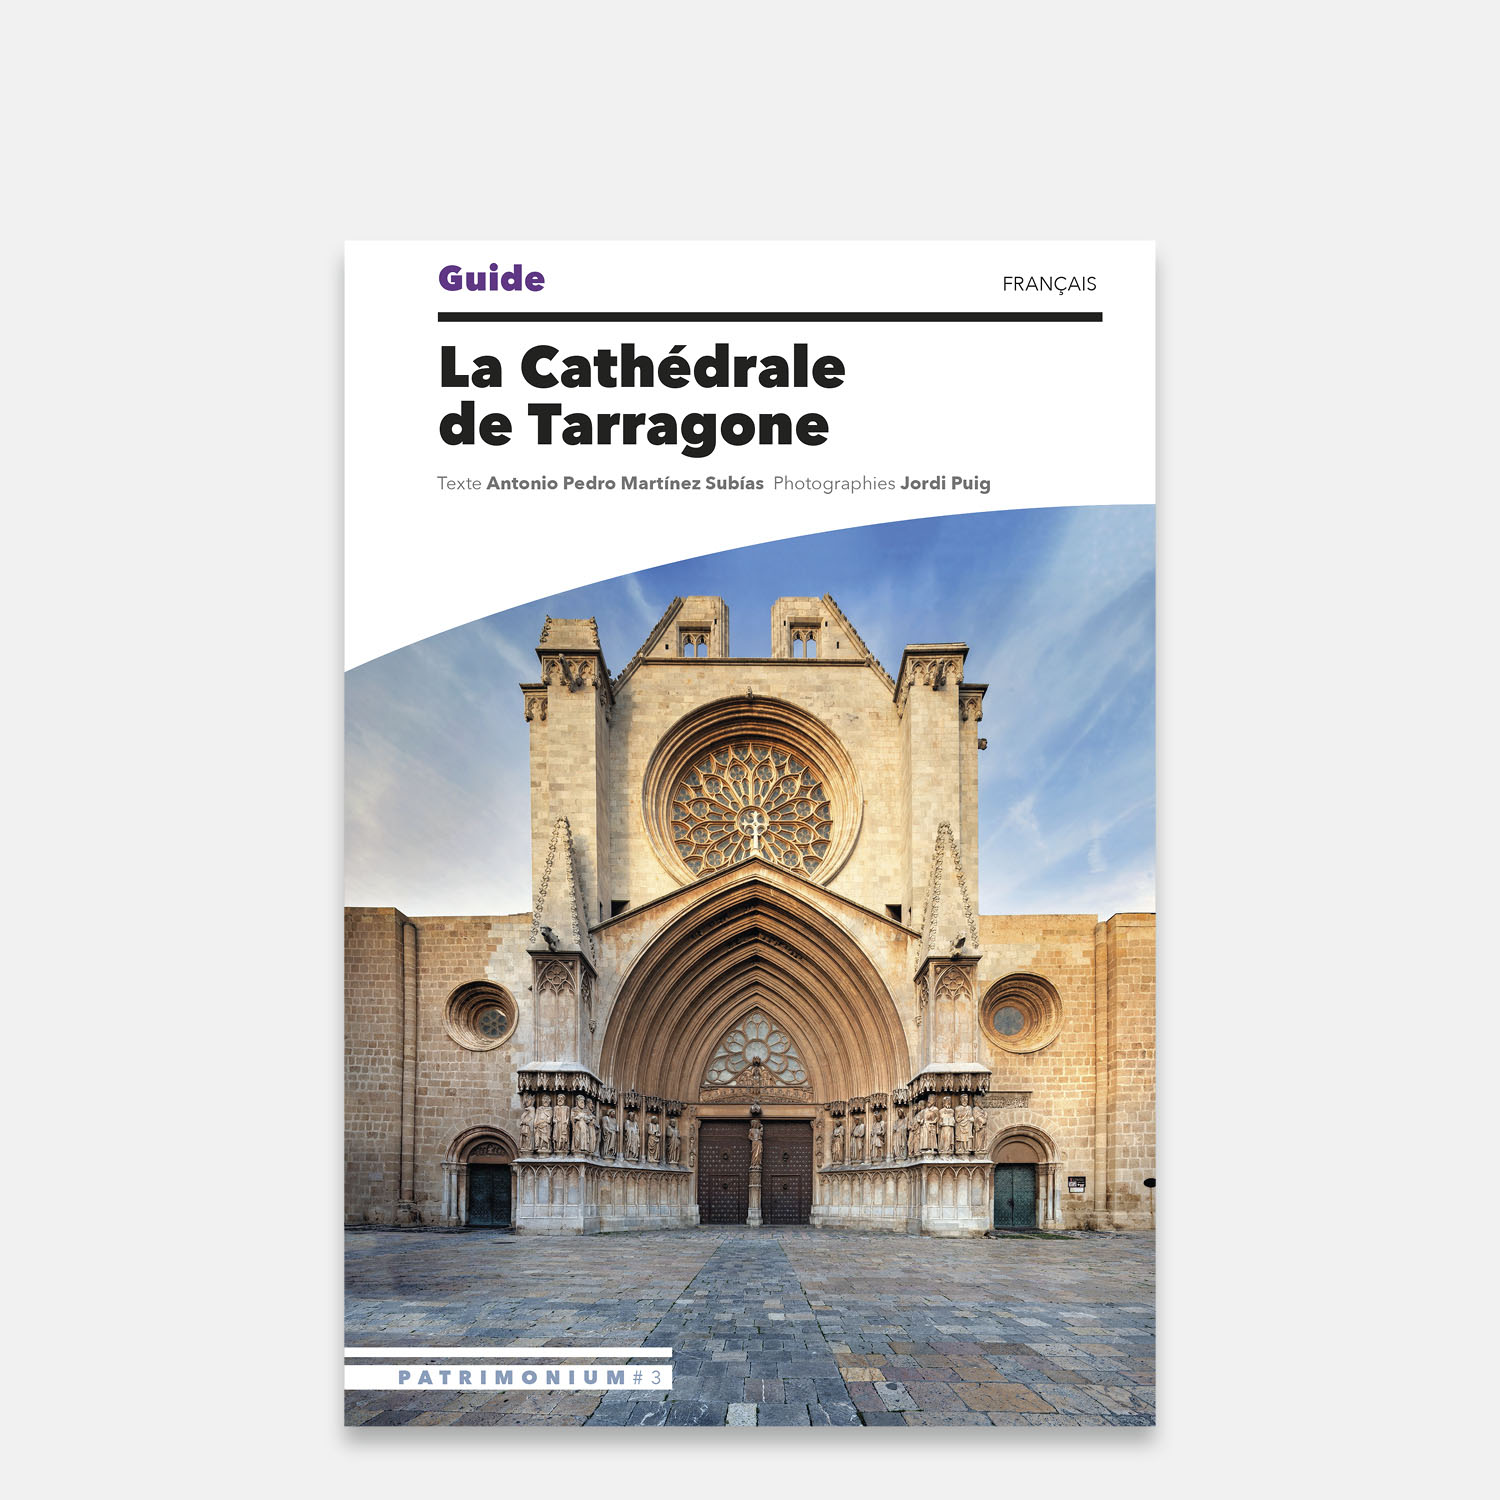 Guide de la Cathédrale de Tarragone cob gtc f cathedrale tarragone